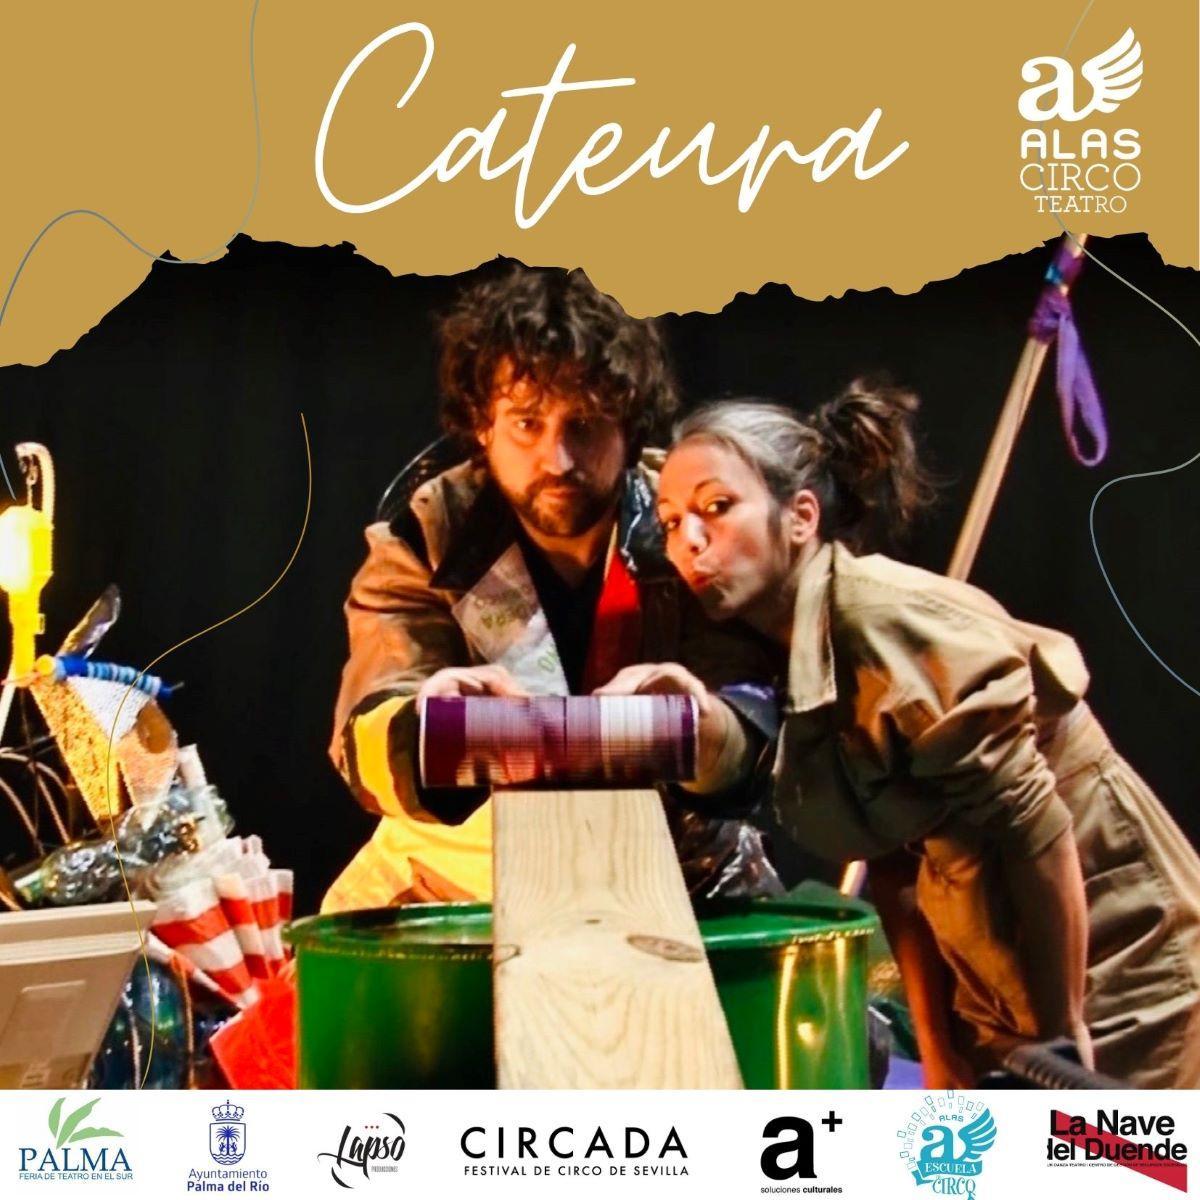 Alas Circo Teatro presentará en Palma del Río 'Cateura'.